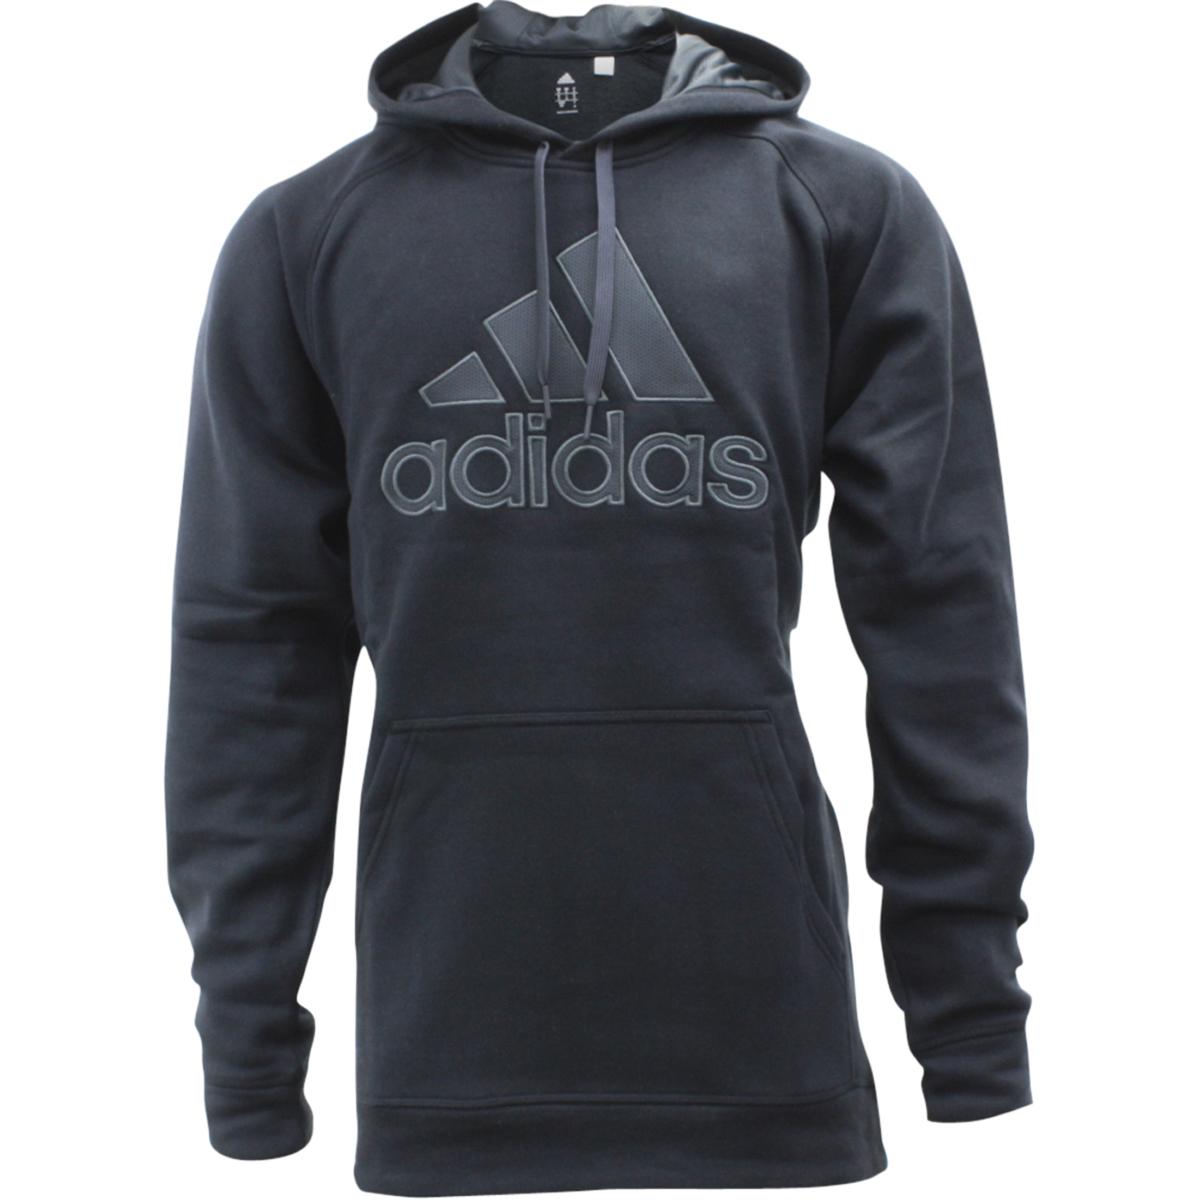 Adidas Men's Pullover Core Logo Fleece Hoodie Sweater Shirt